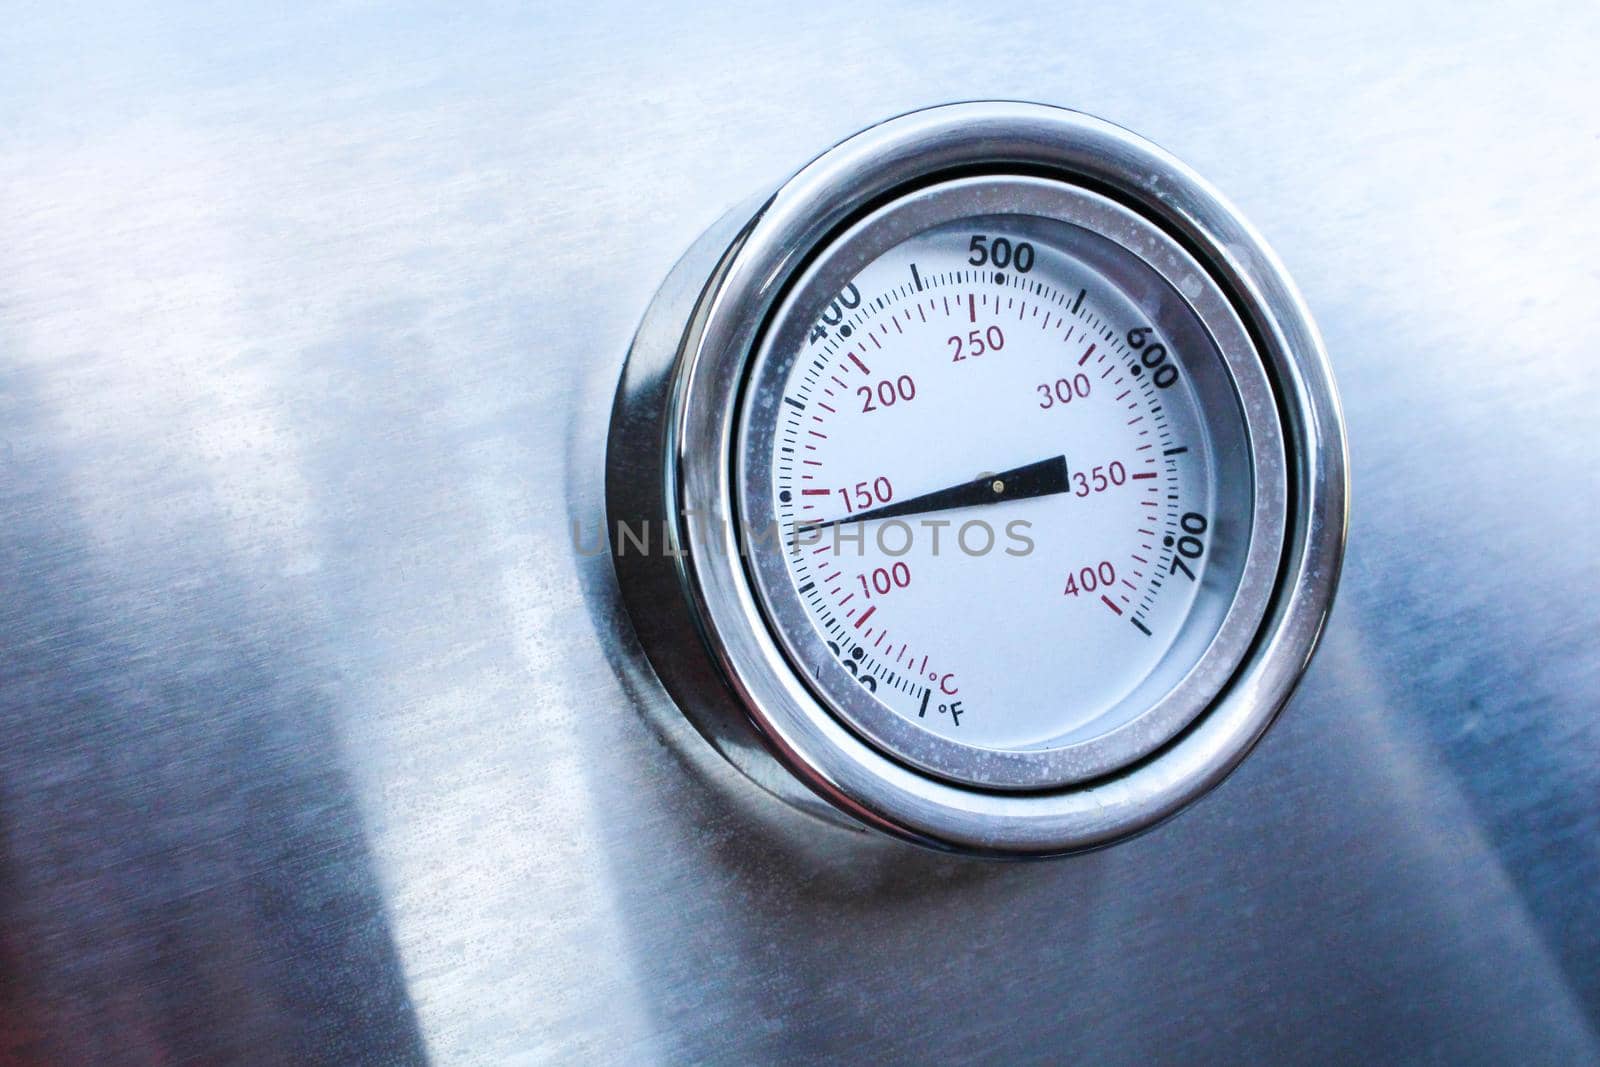 temperature gauge display barrel grill. by JuliaDorian